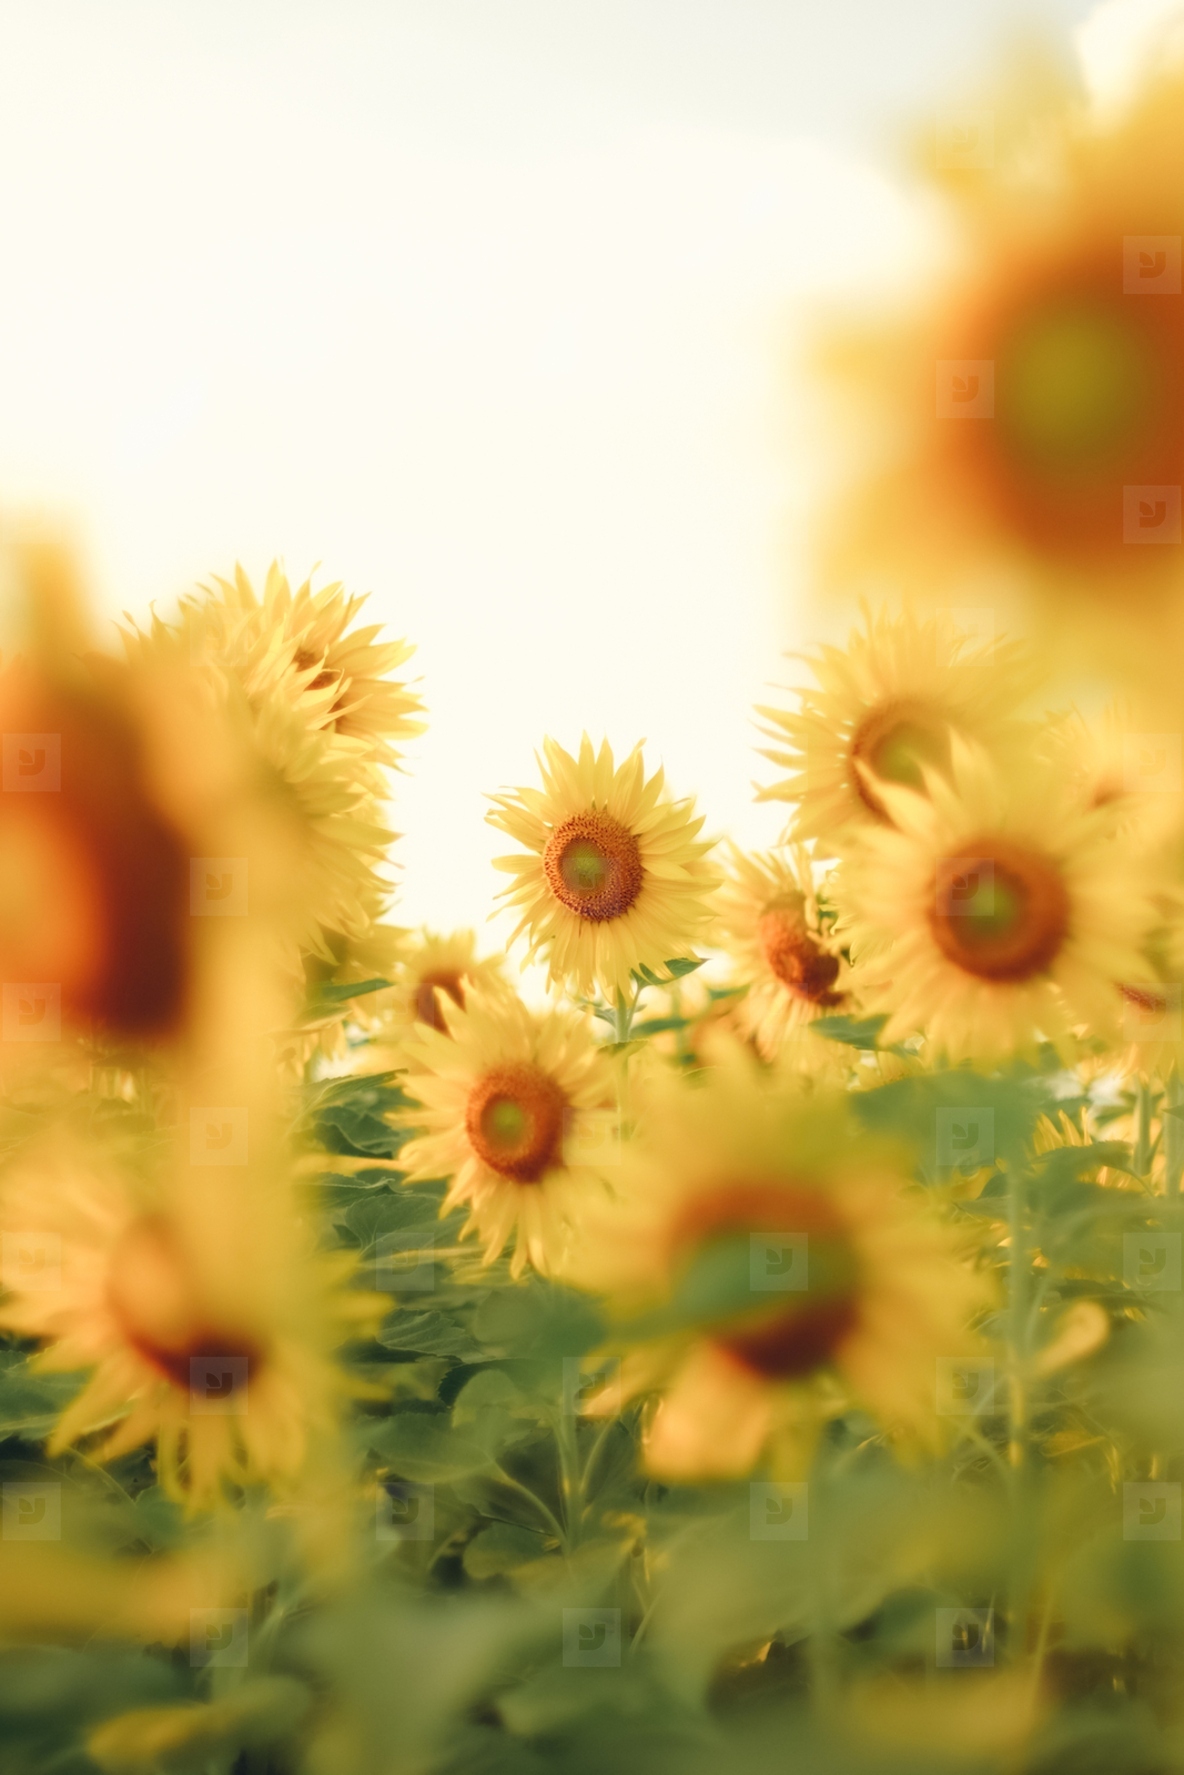 Blurry Sunflowers